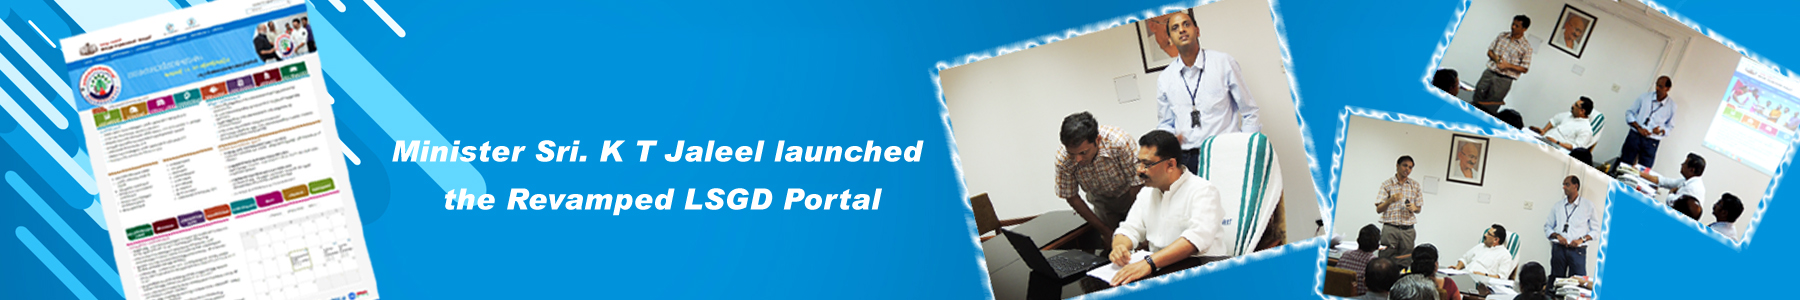 web Portal Launching